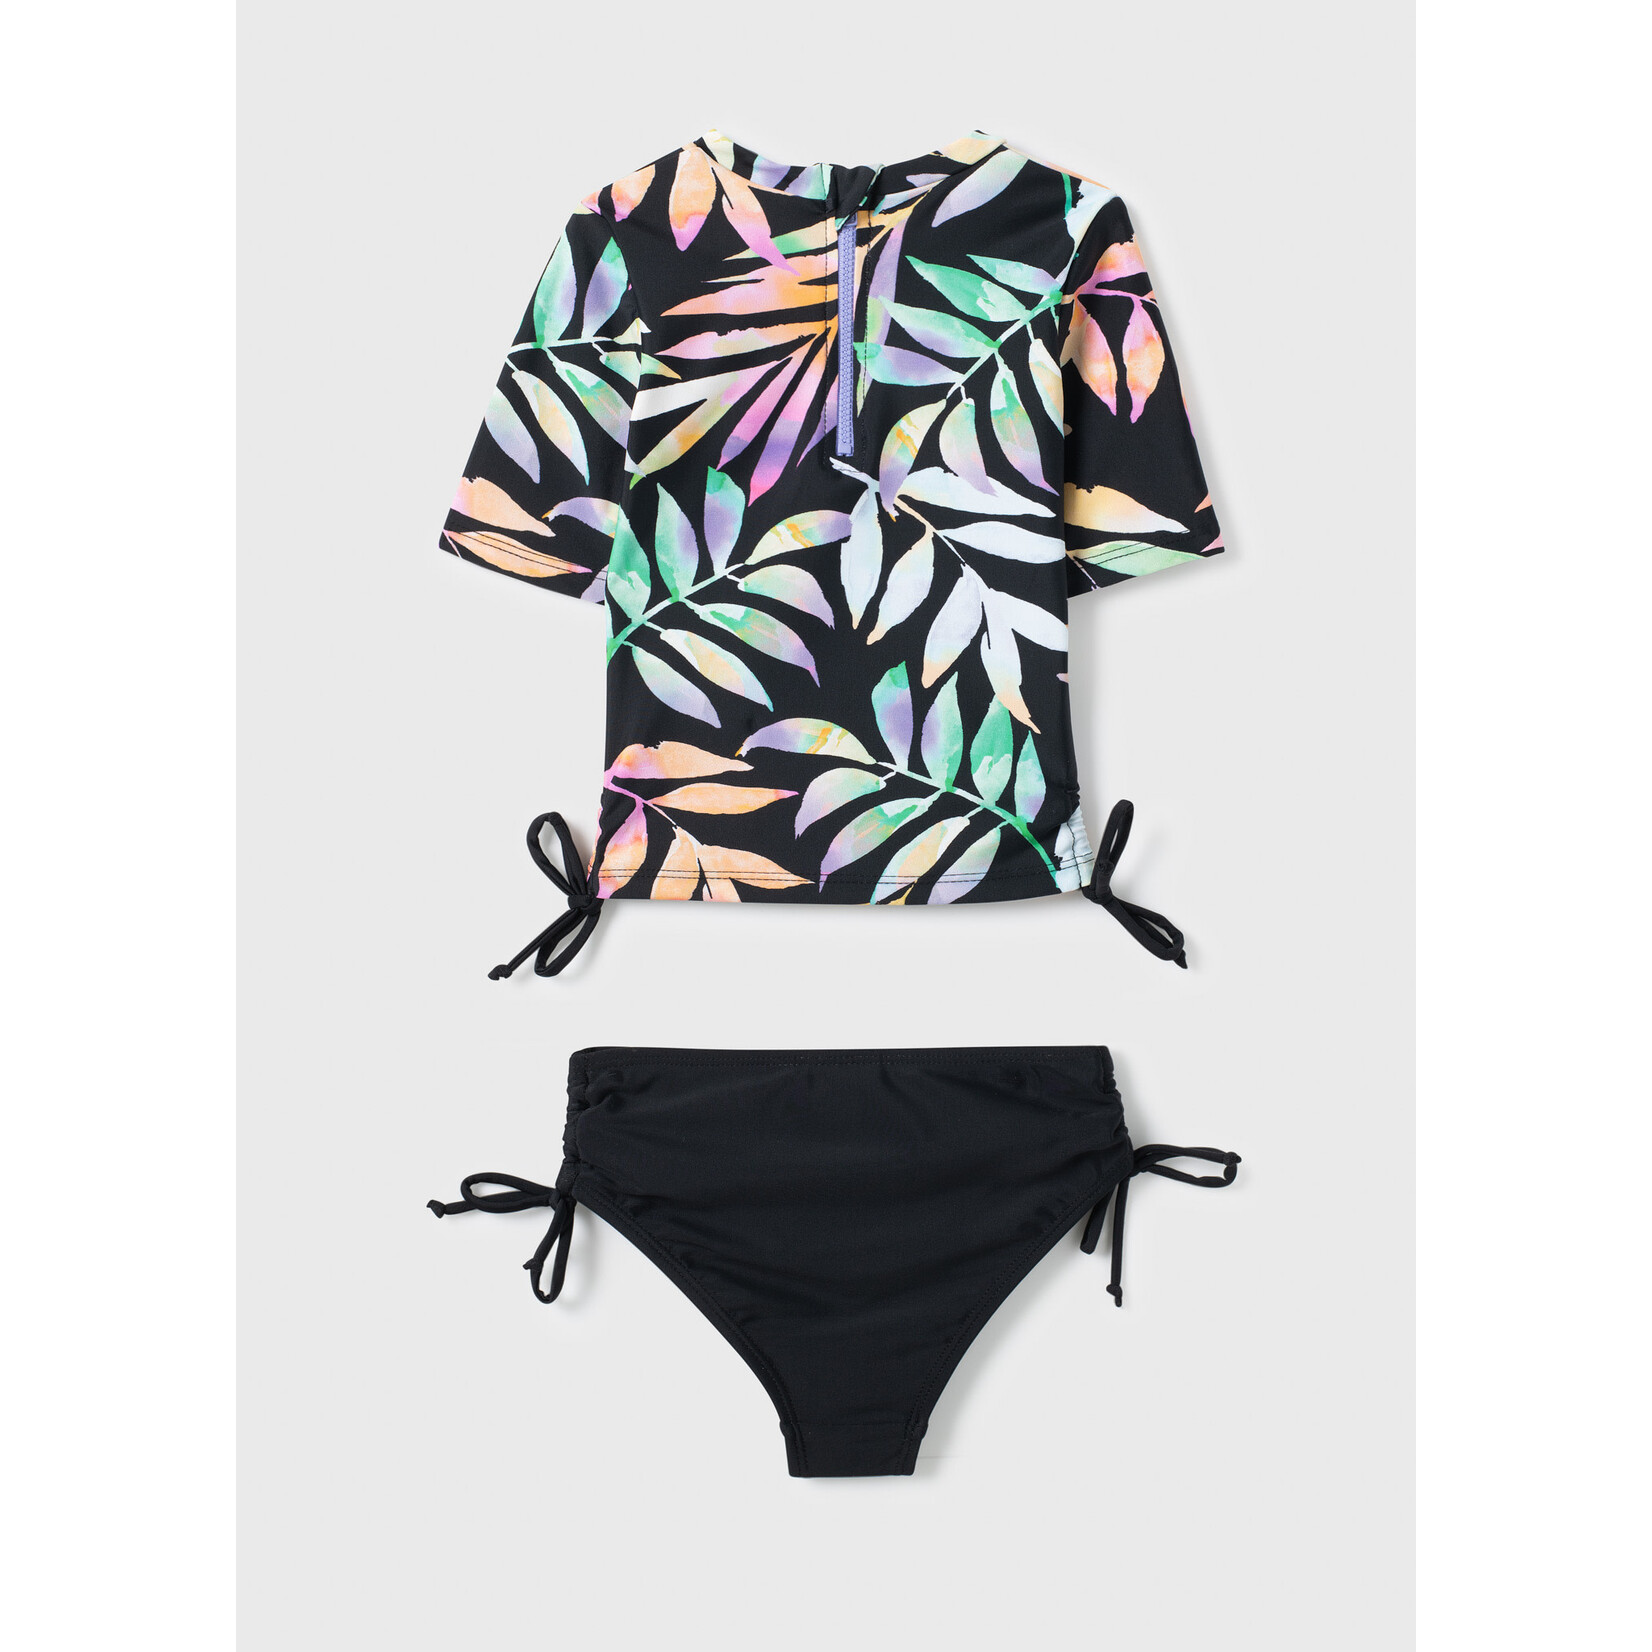 Mandarine & Co. MANDARINE & CO. - Black two-piece swimsuit with colorful leaf print